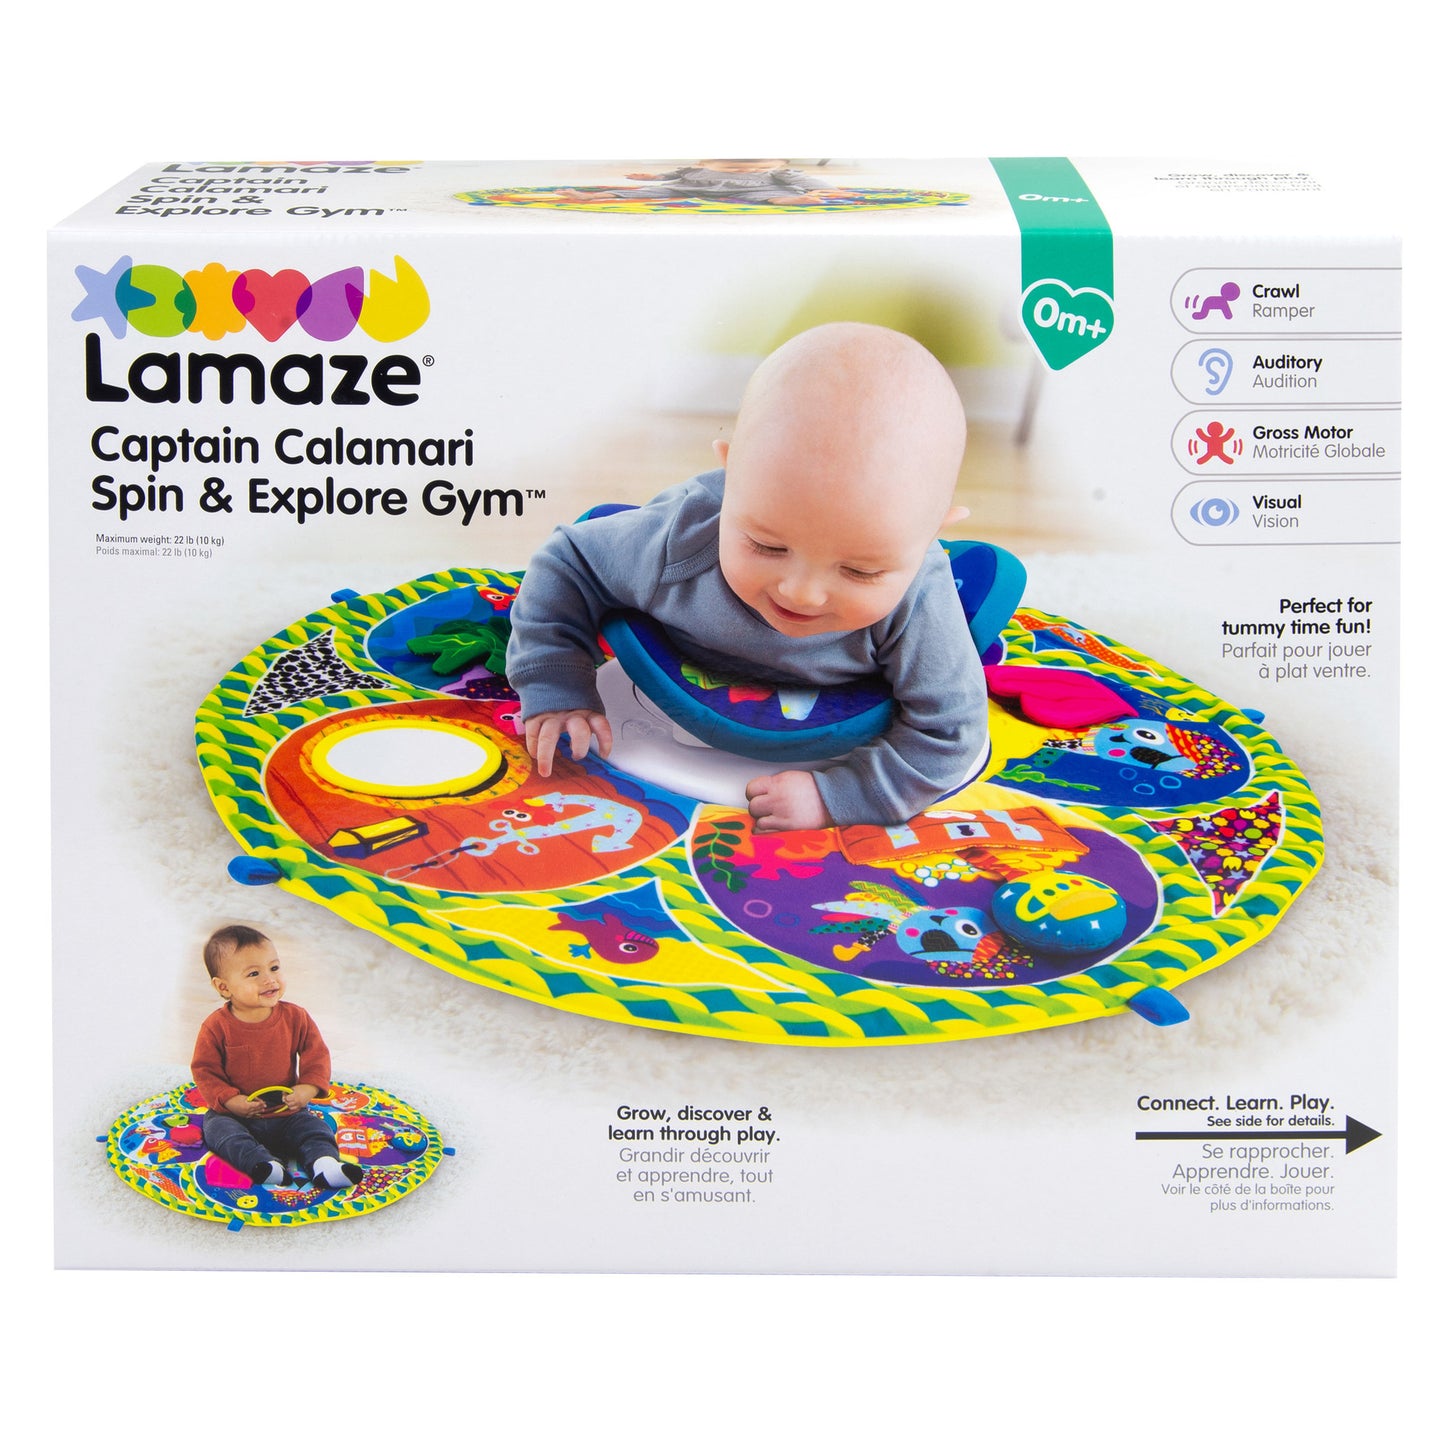 Baby City's Lamaze Spin & Explore Gym